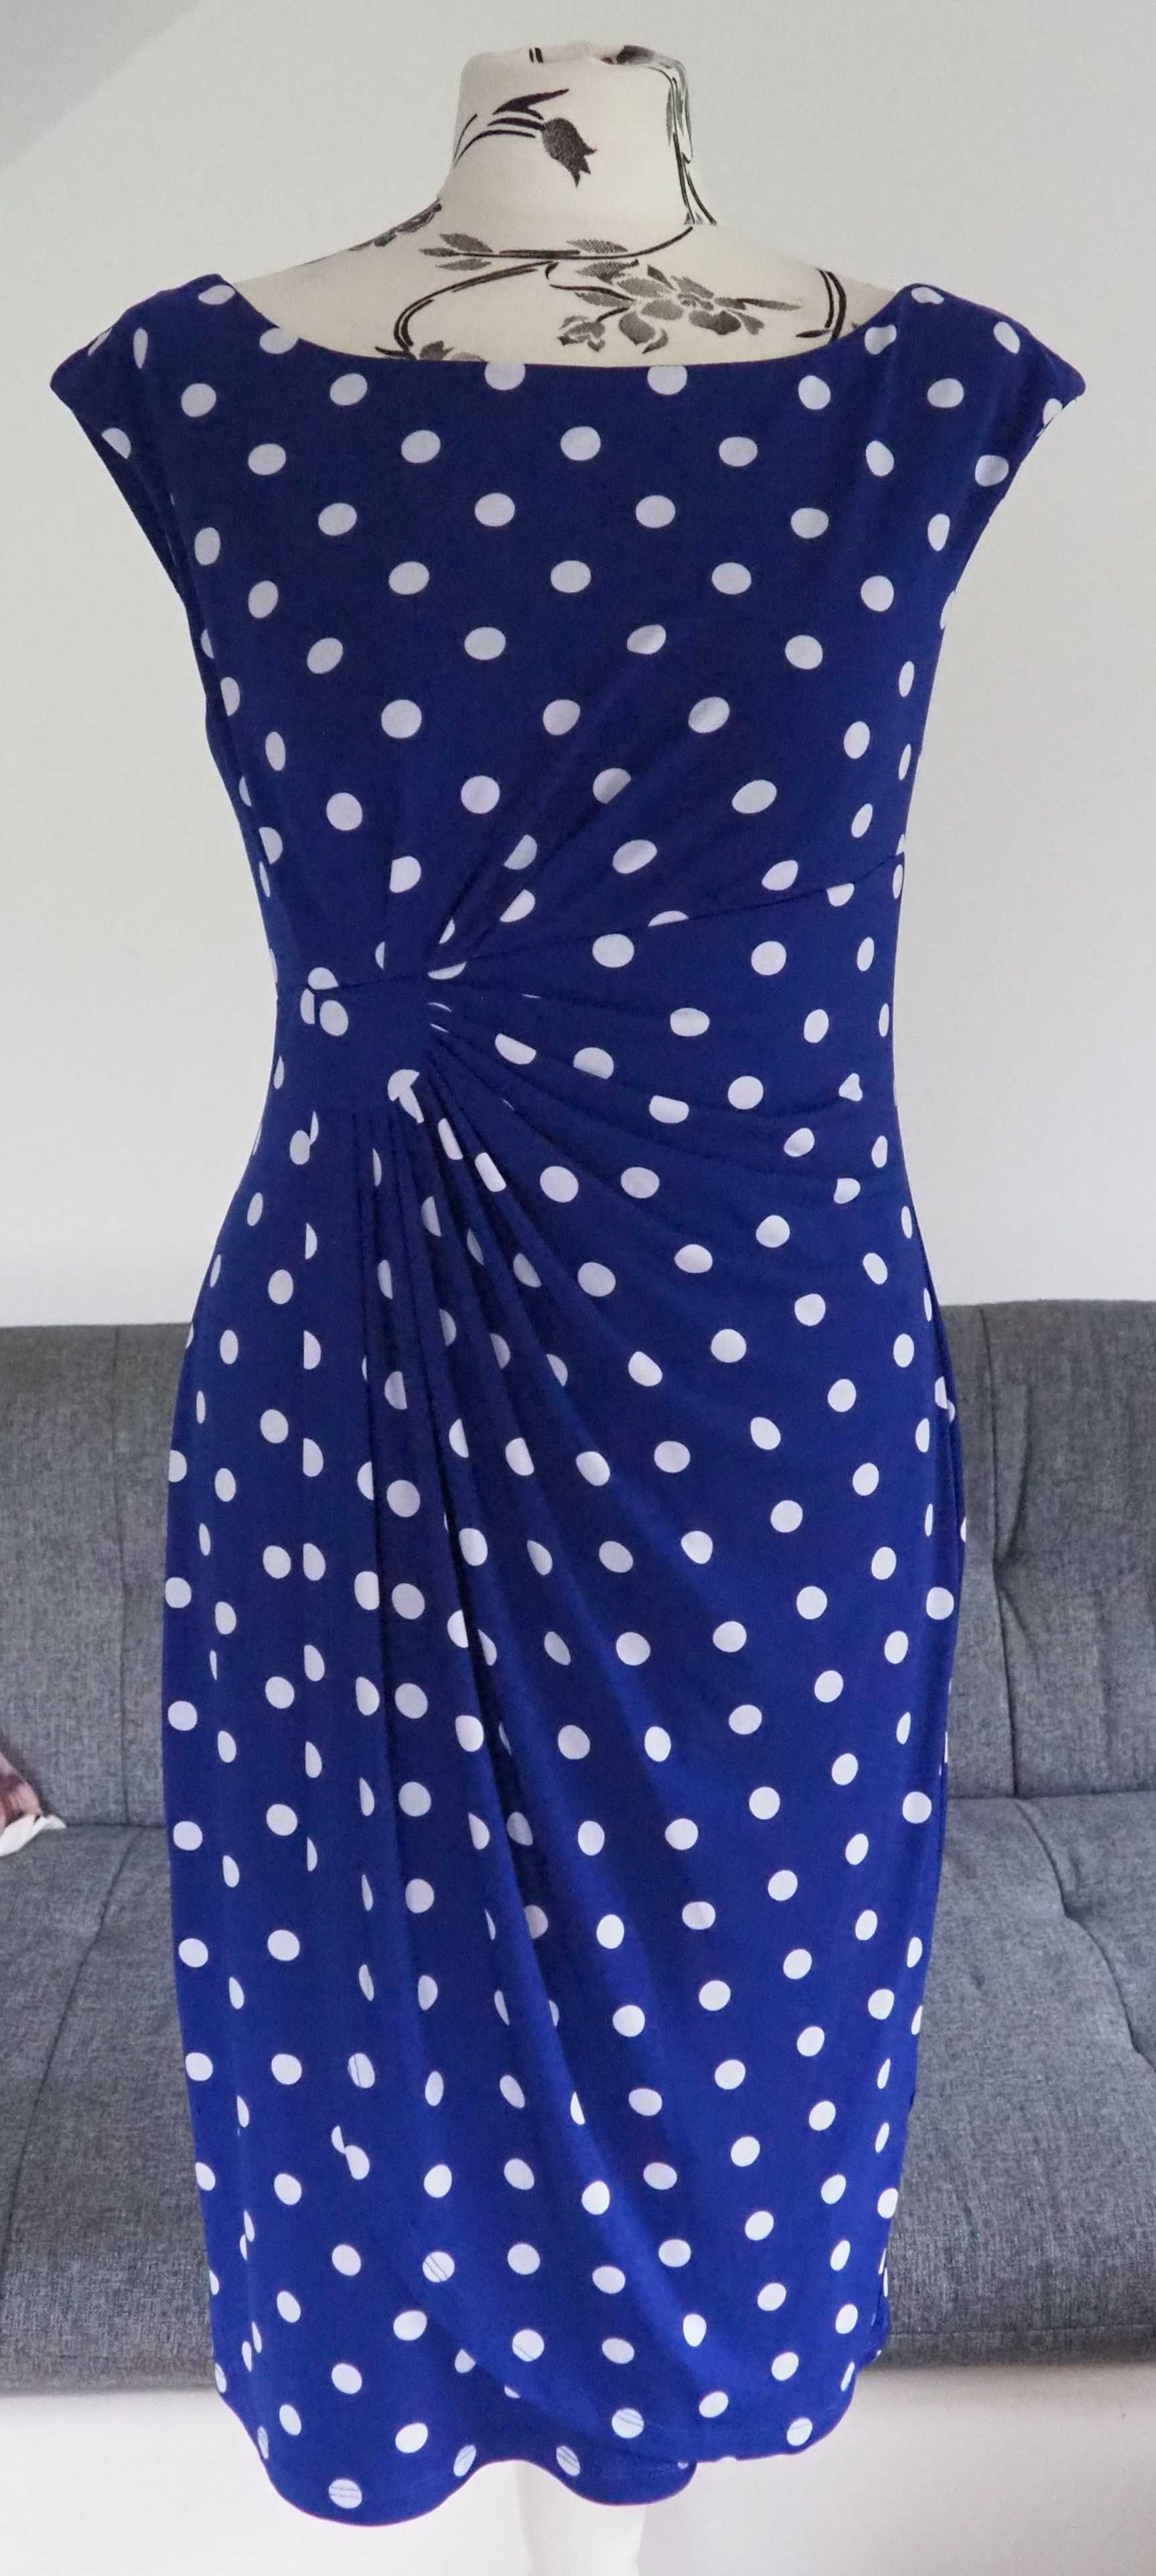 Connected Apparel_polka dot blue dress_rozmiar S/M